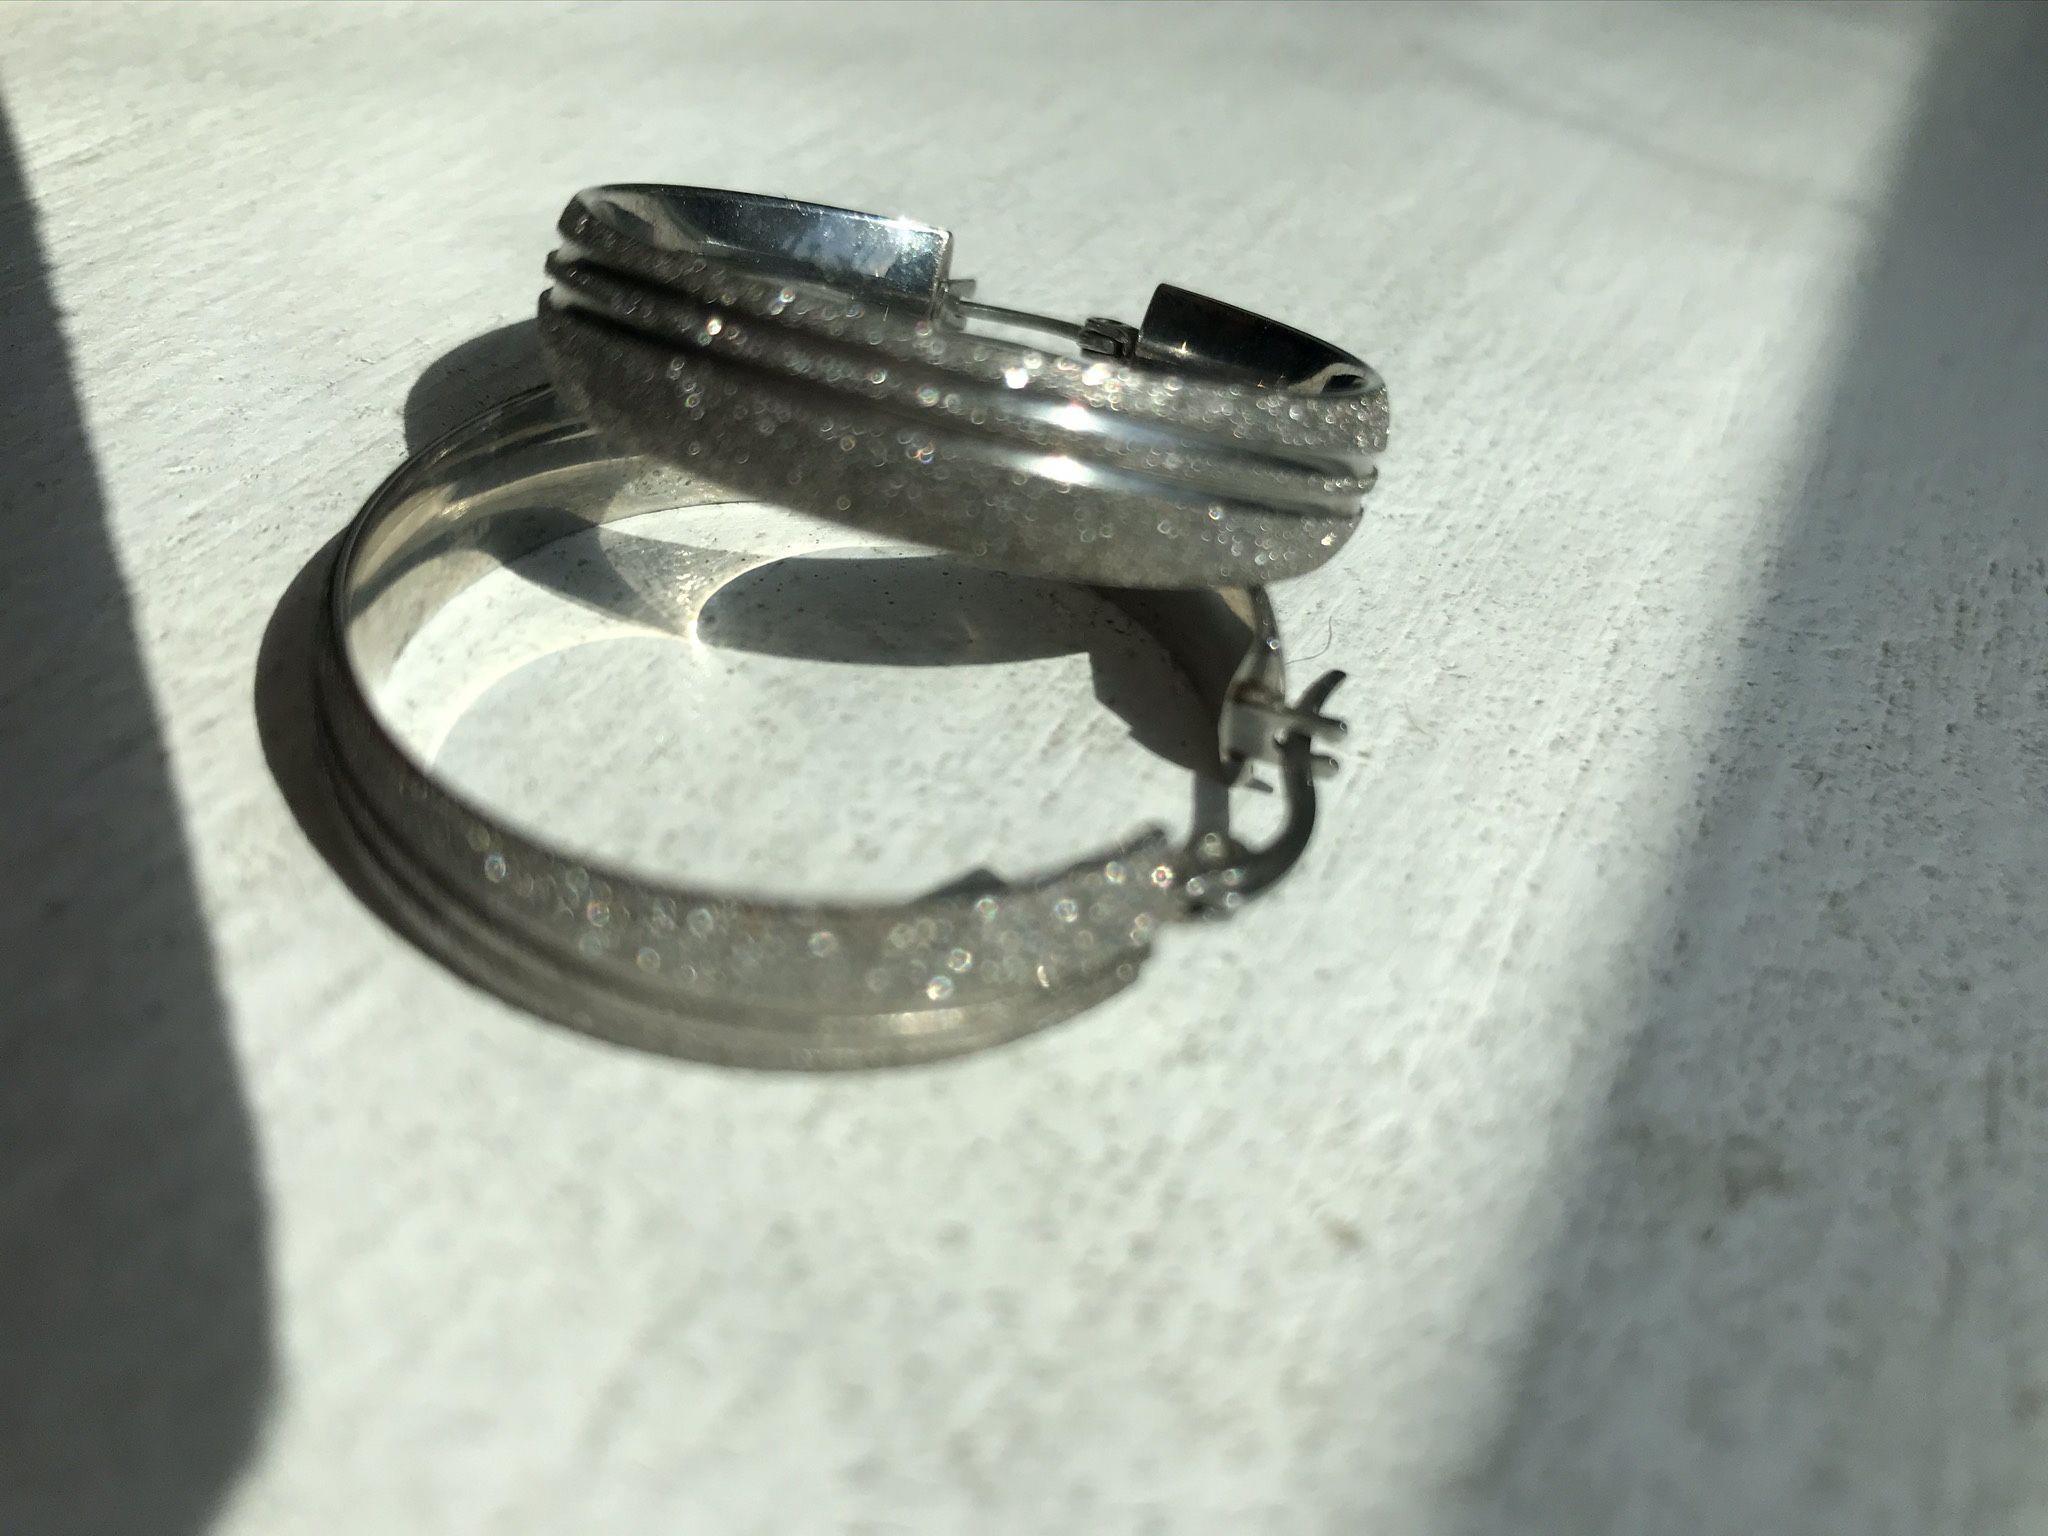 Stainless steel silver sandy diamond cut shine hoop earrings new. measurements: 1 1/4 inch wide